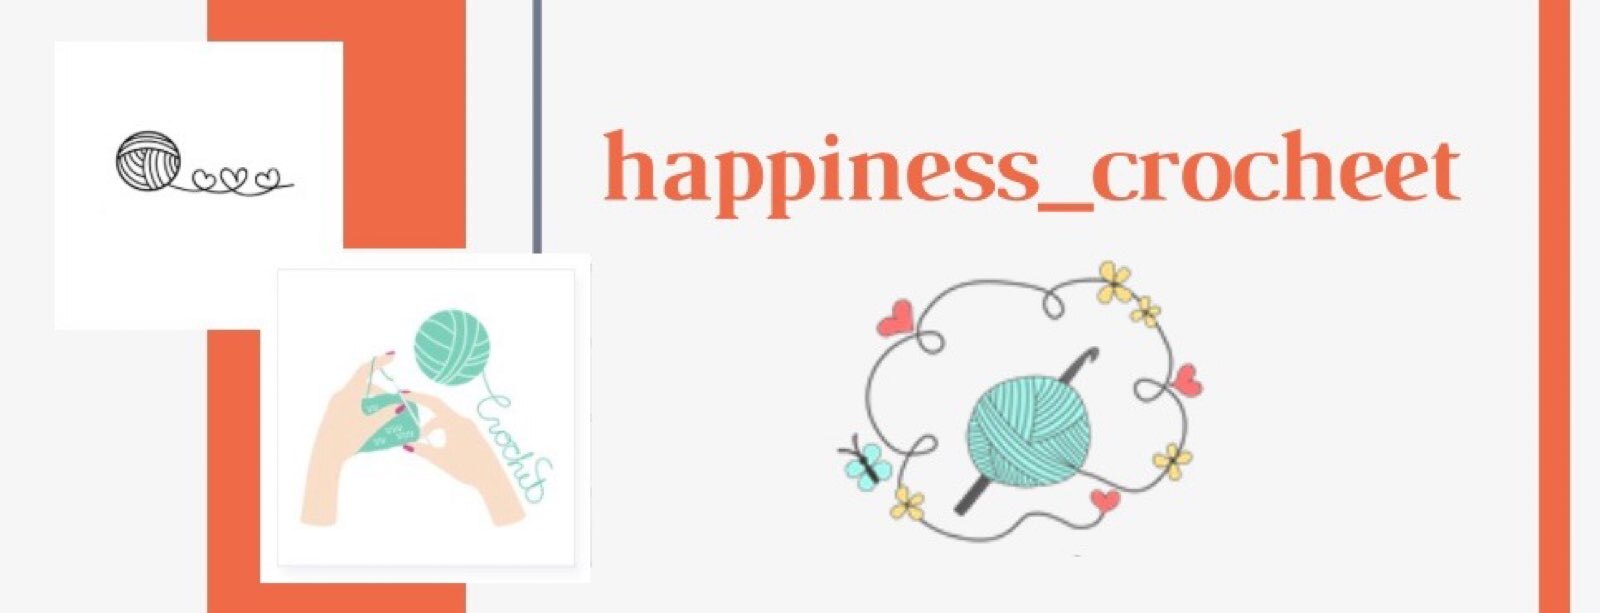 Happiness_crocheet